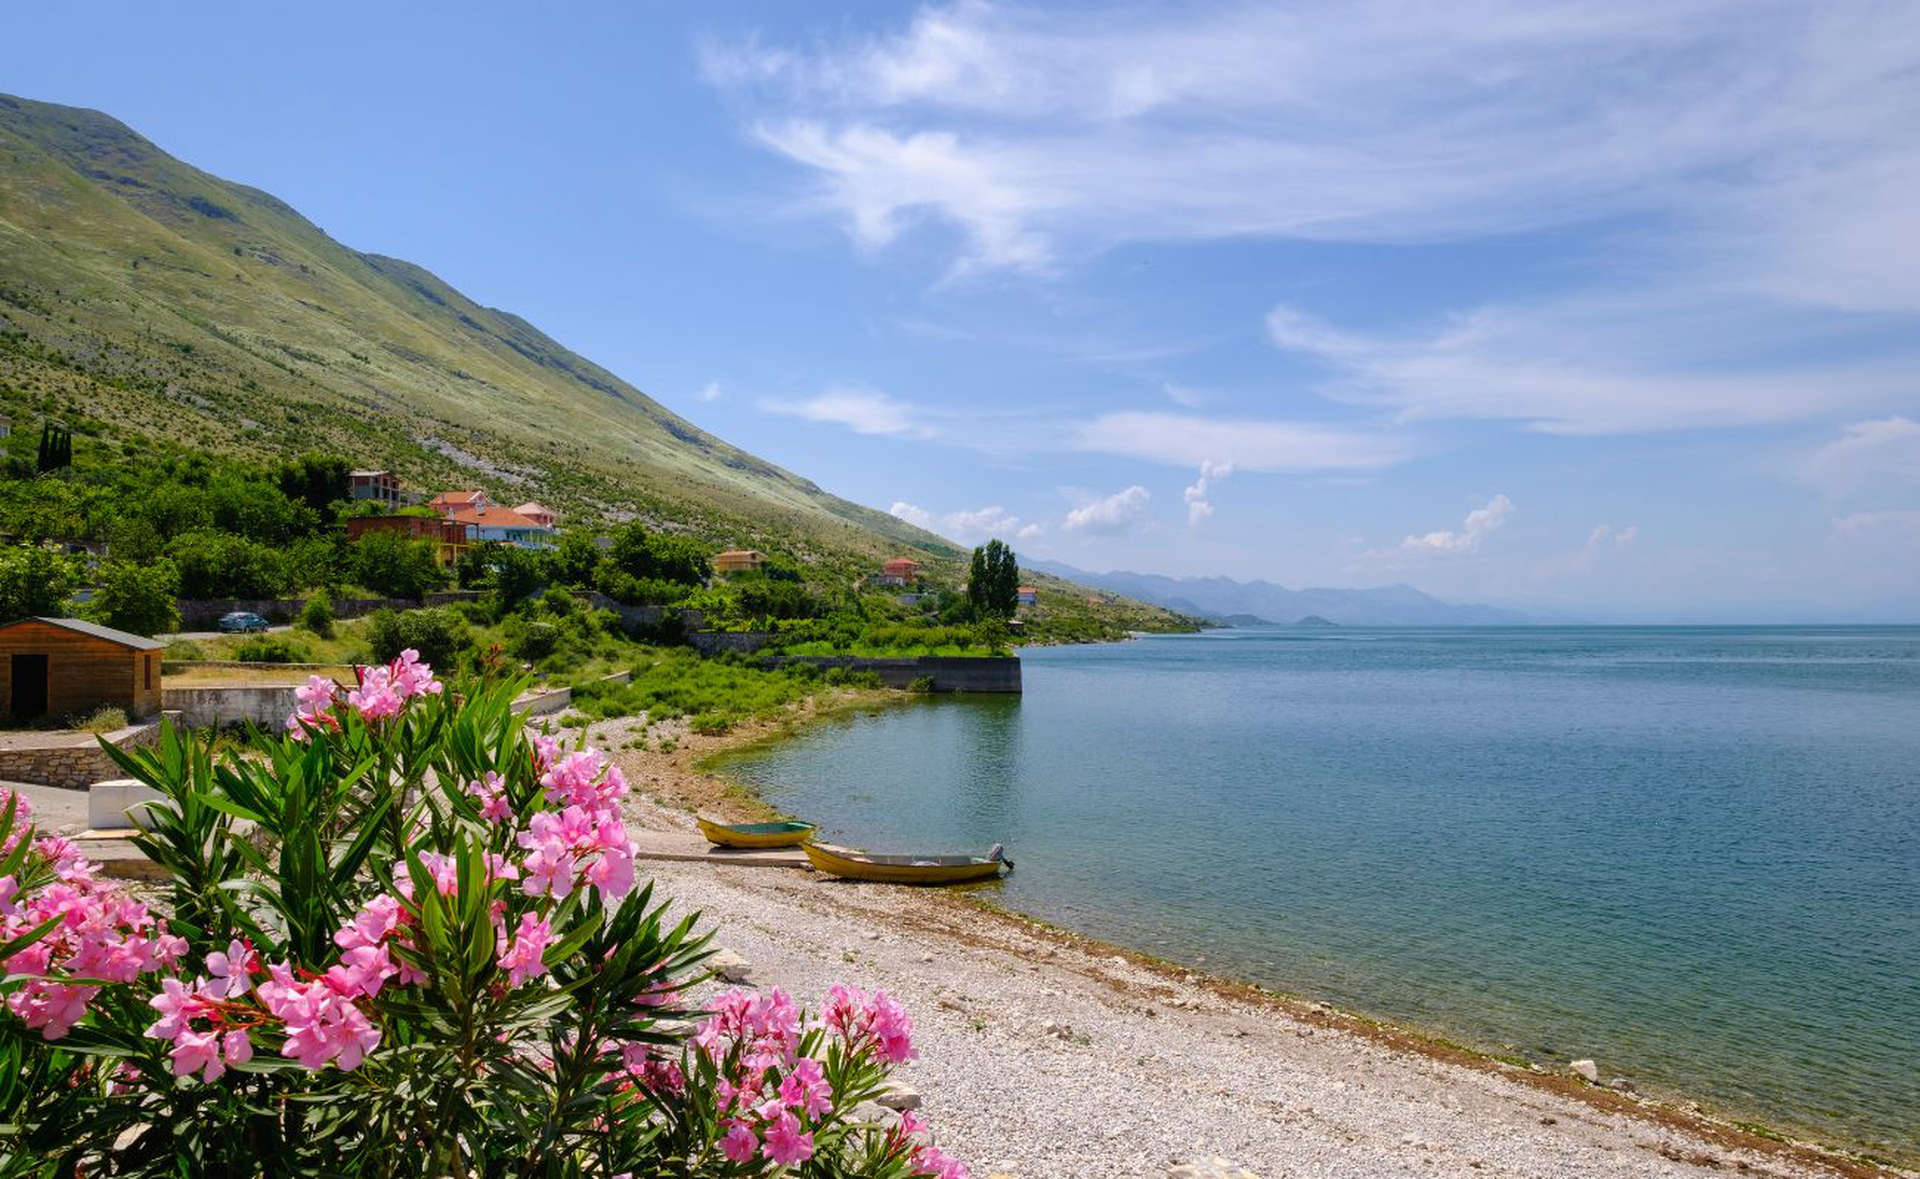 Lake Shkodra, Albania